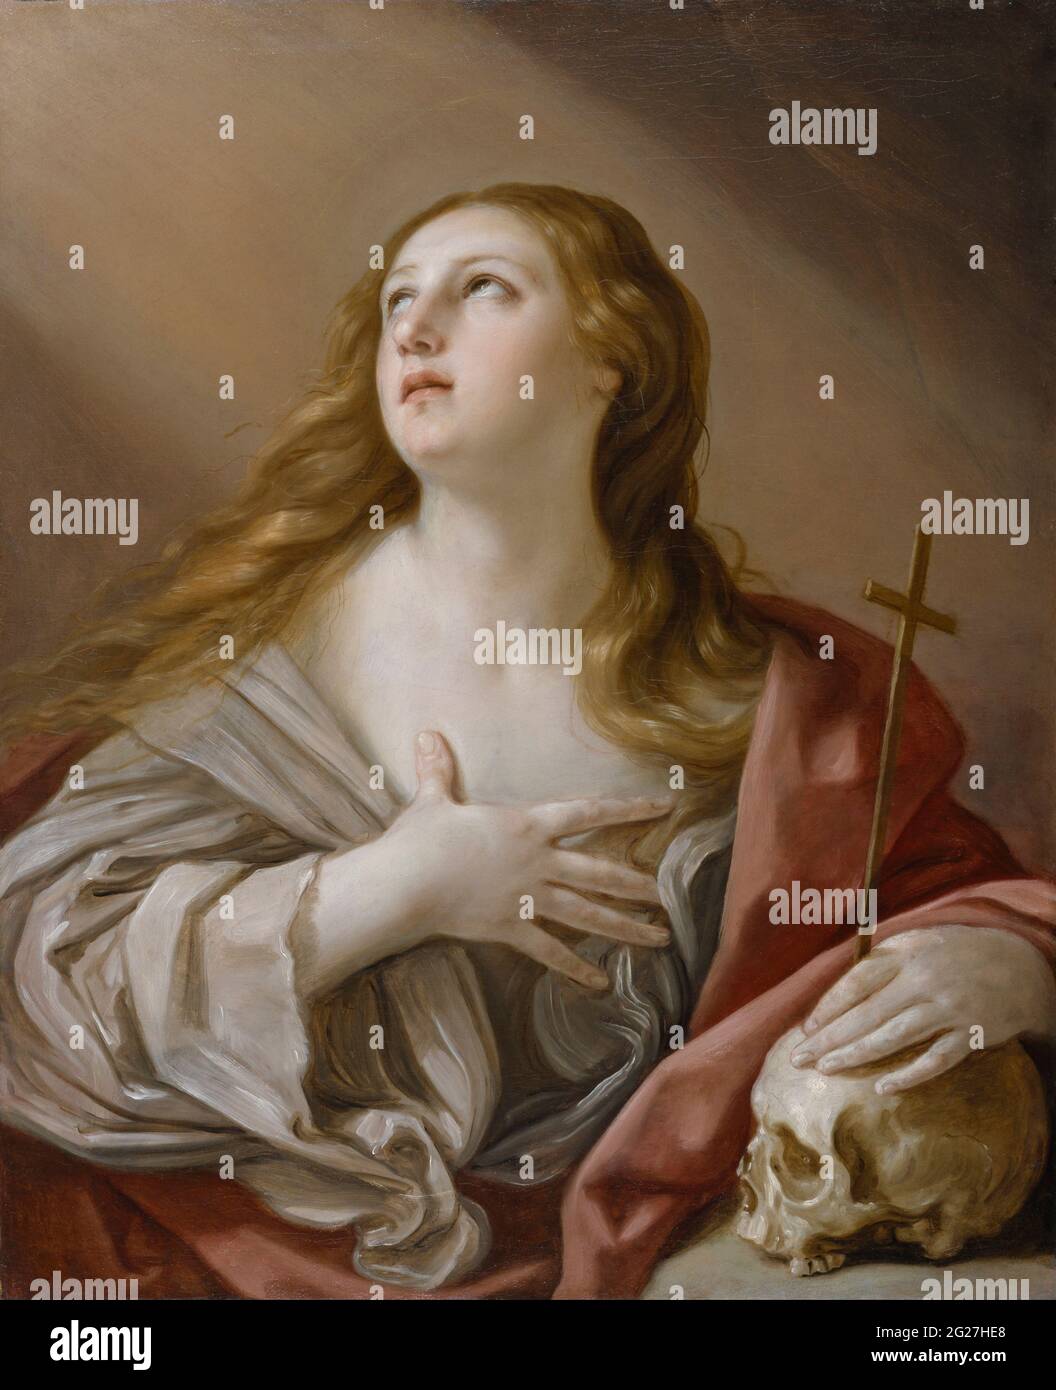 17th century artwork of Mary Magdalene gazing towards heaven. Stock Photo